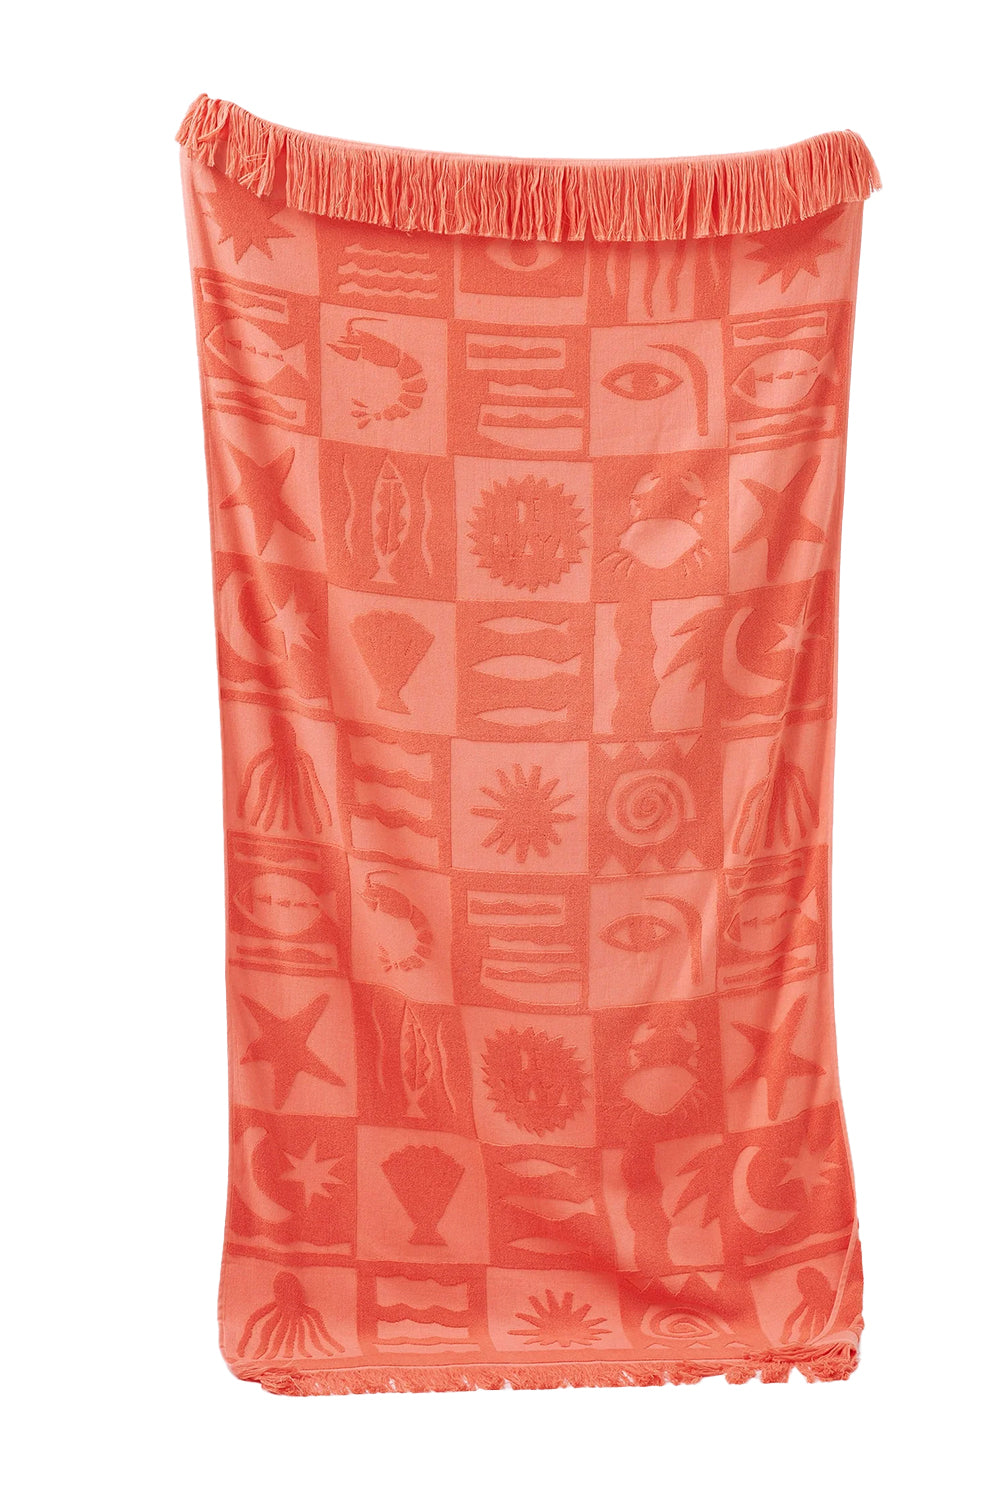 SUNNYLiFE Luxe Towel